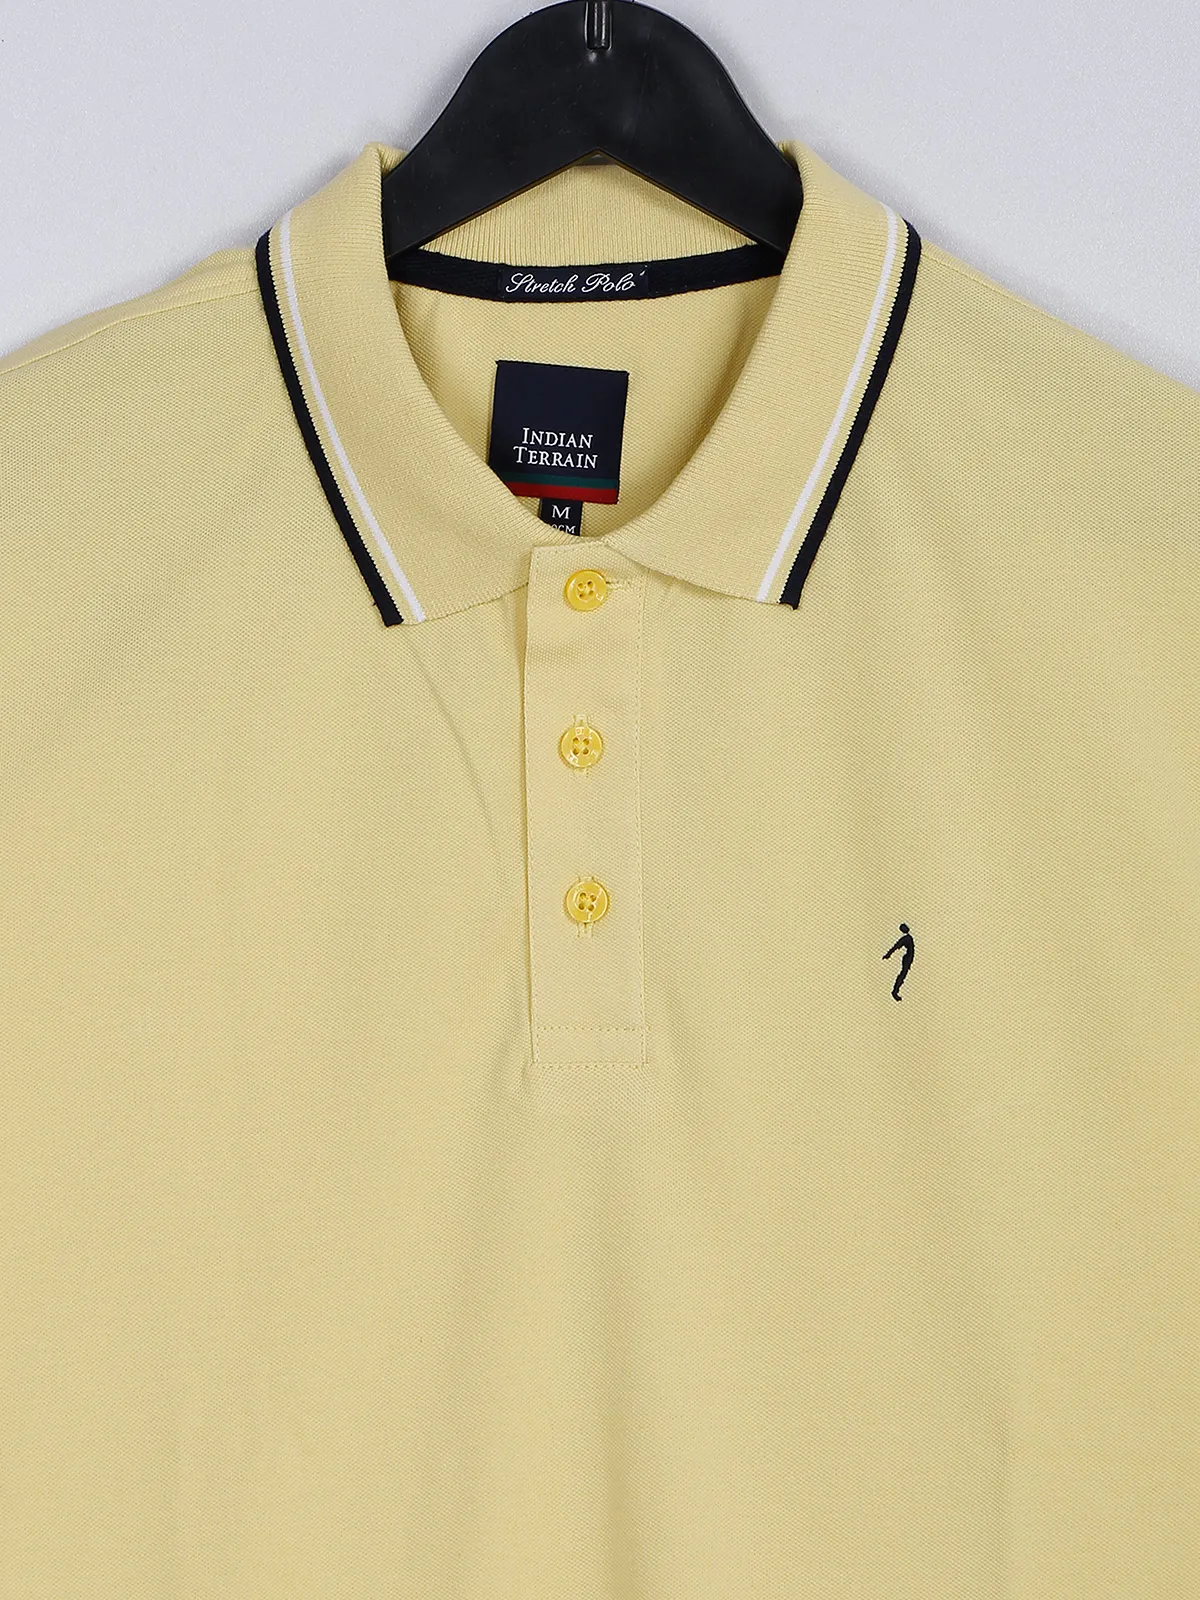 Indian Terrain cotton plain light yellow t shirt